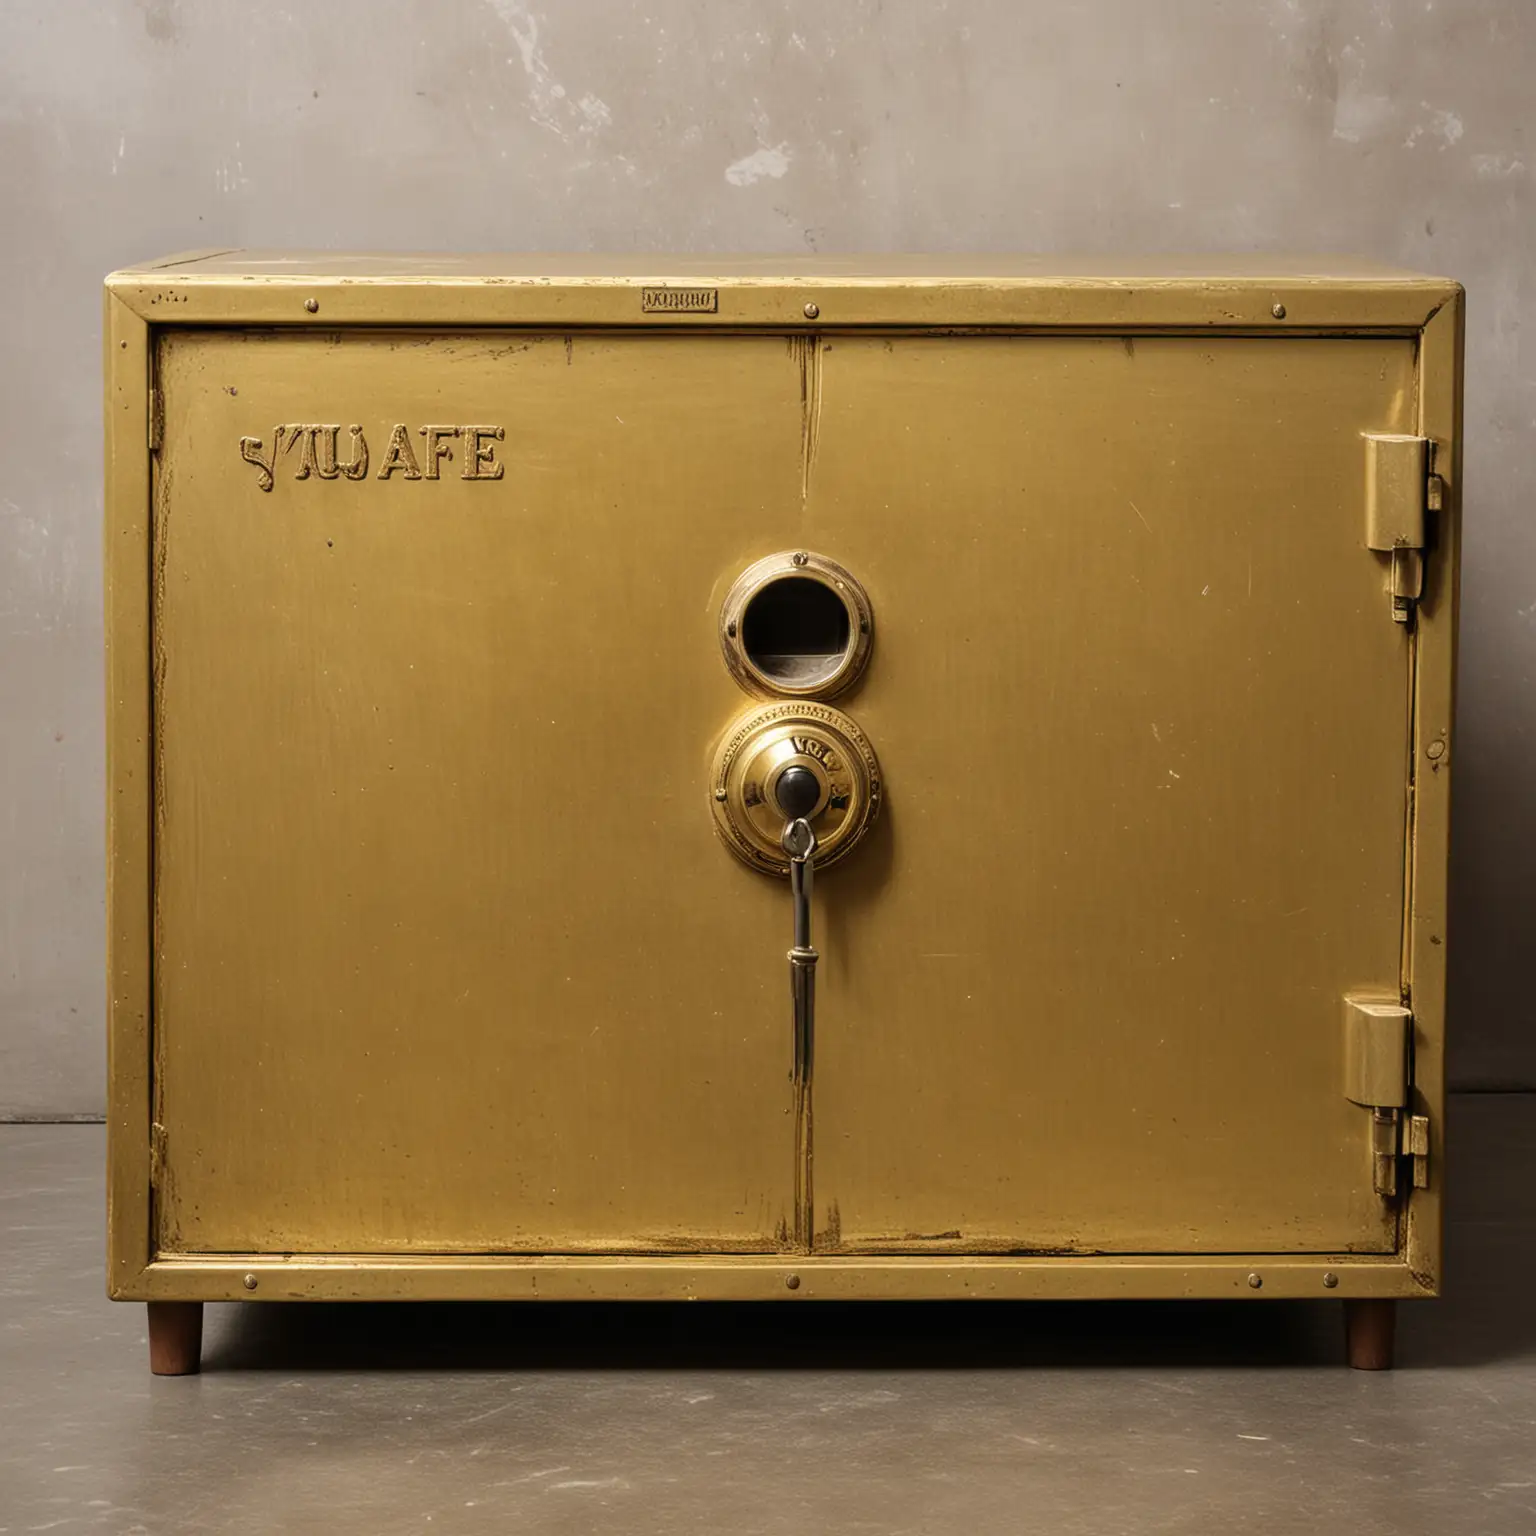 Luxurious Large Golden Safe with Engraved Inscription VAU